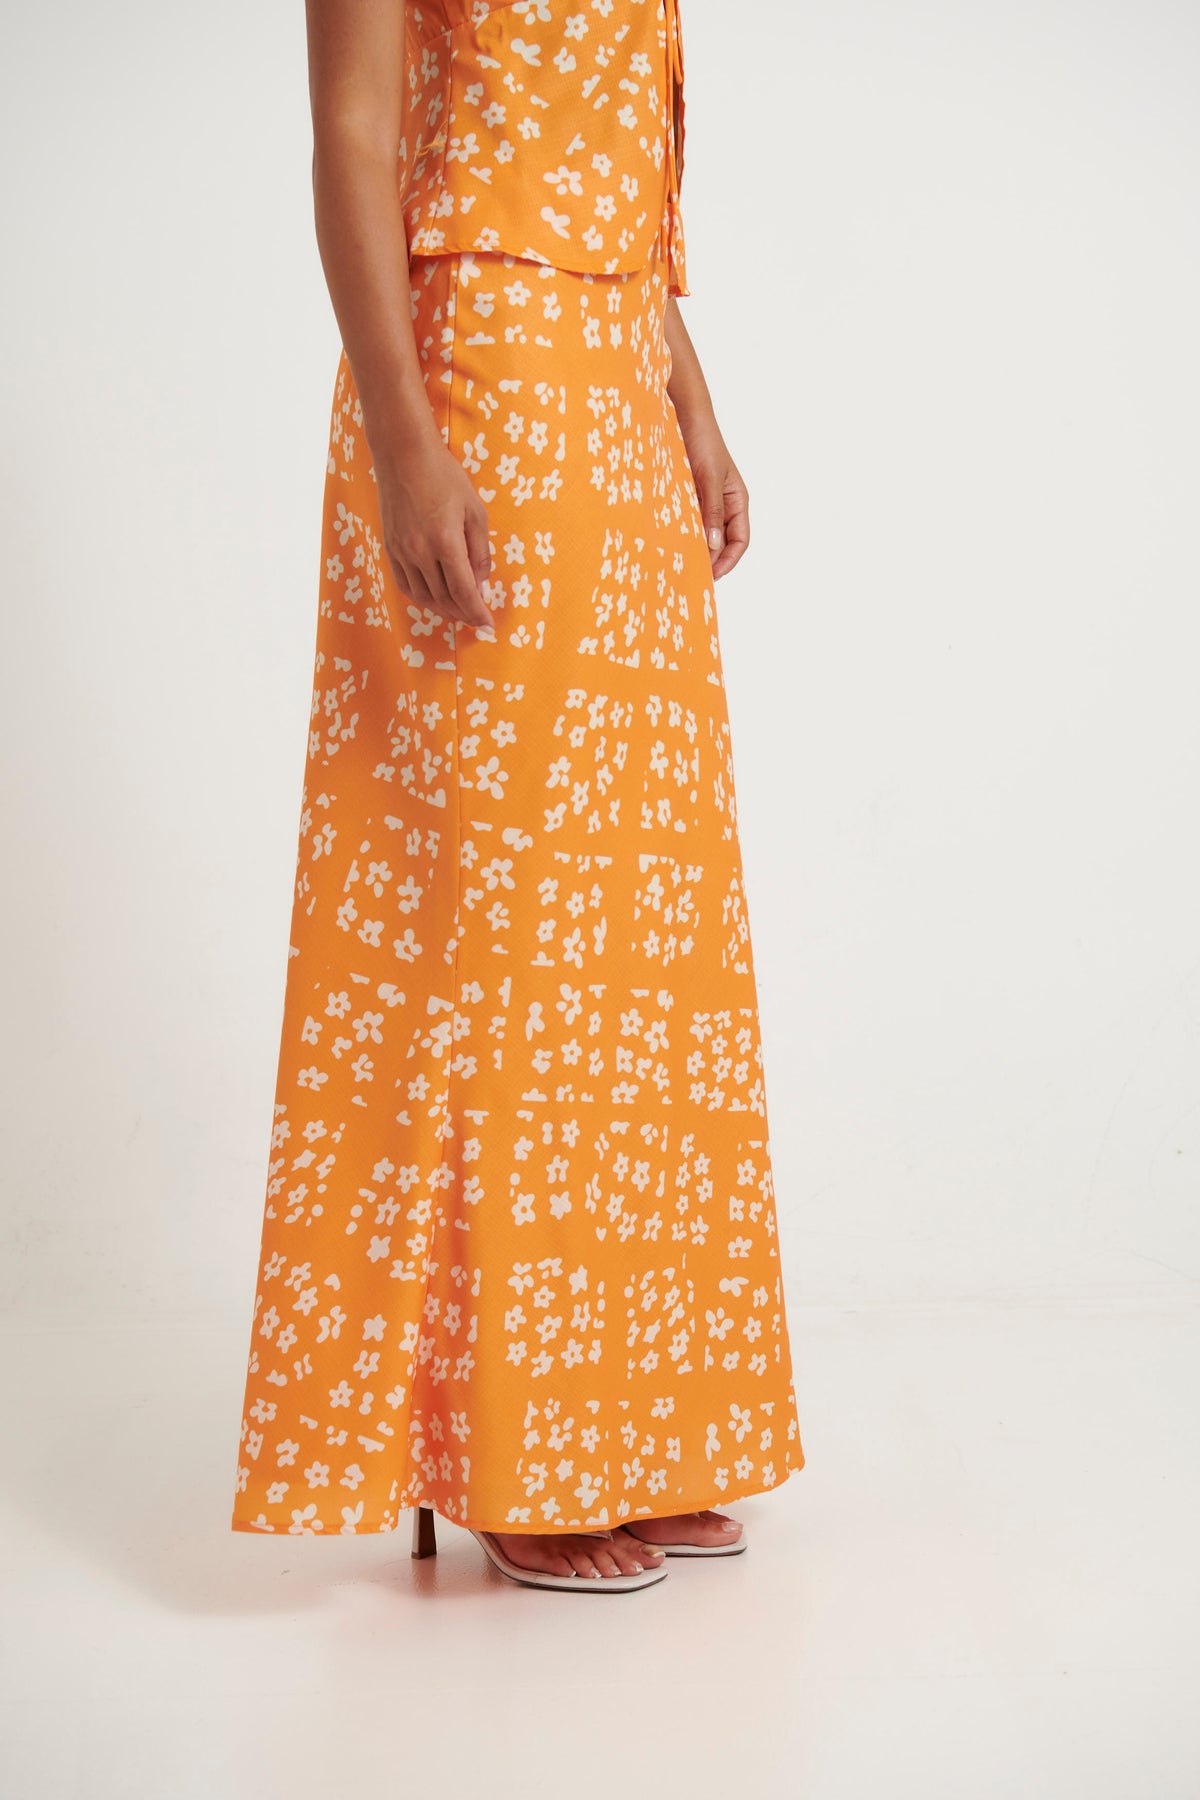 Ryleigh Maxi Skirt Tangerine - FINAL SALE